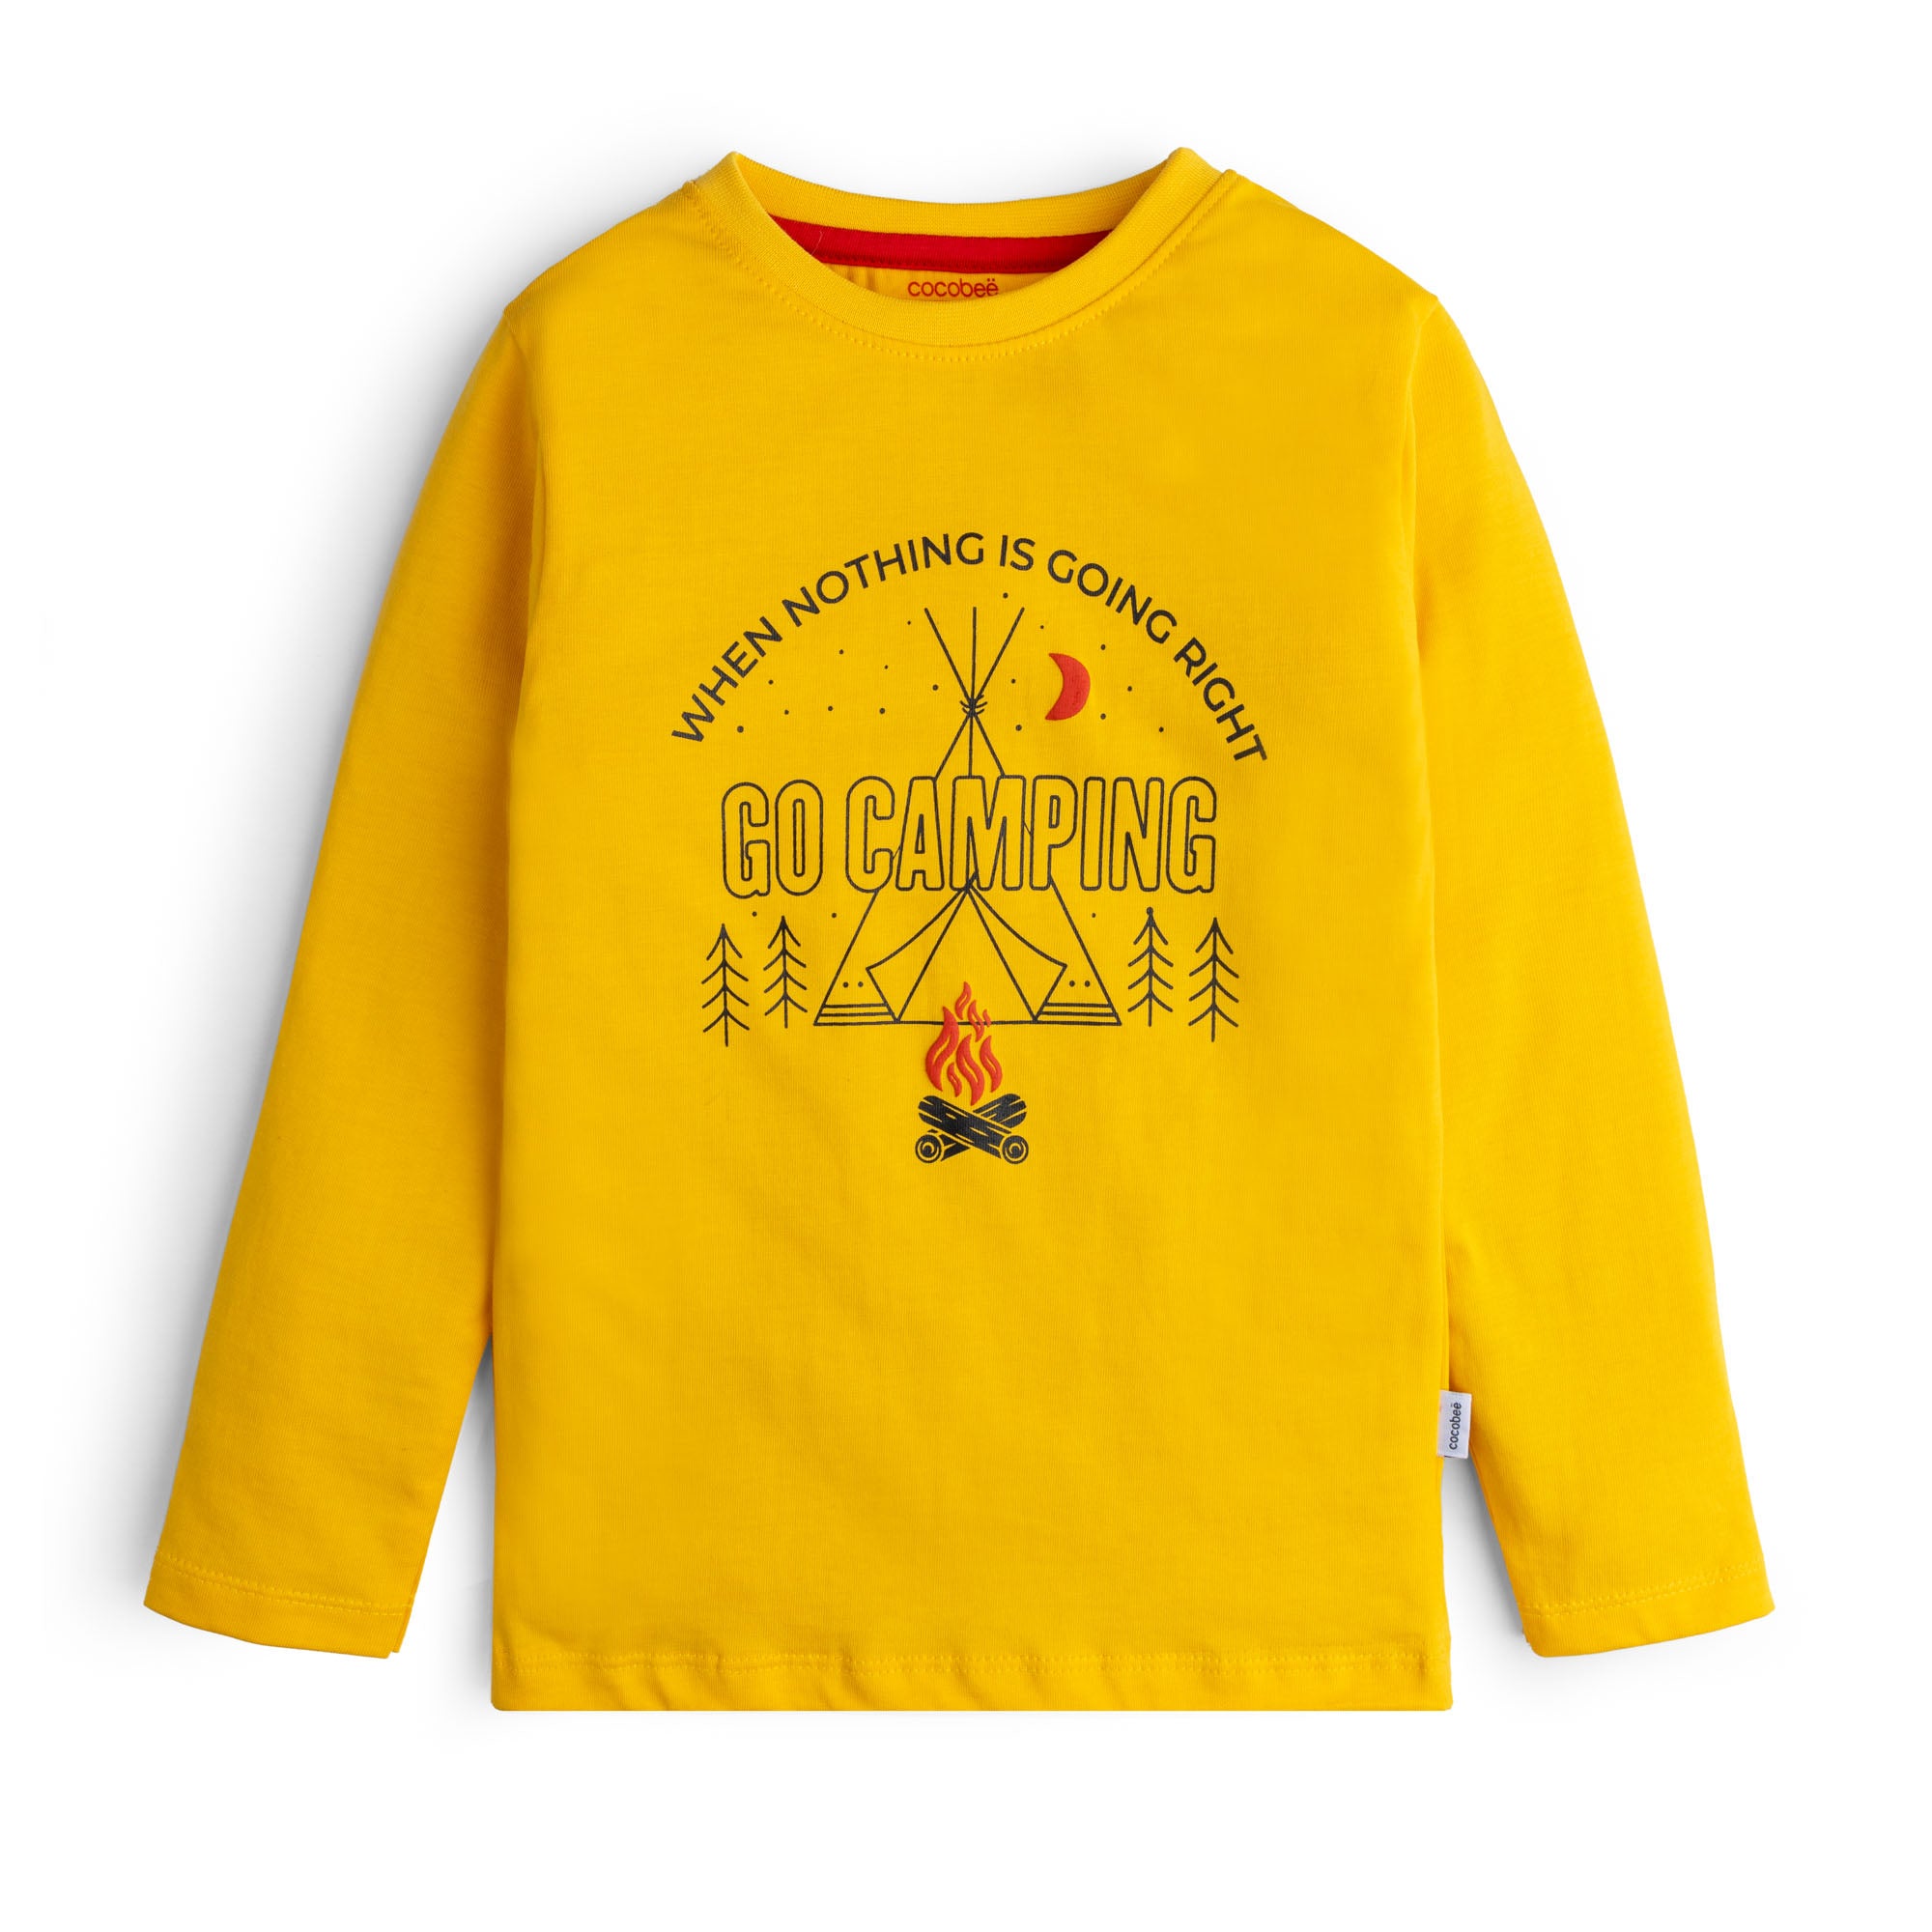 Canary Yellow T-shirt